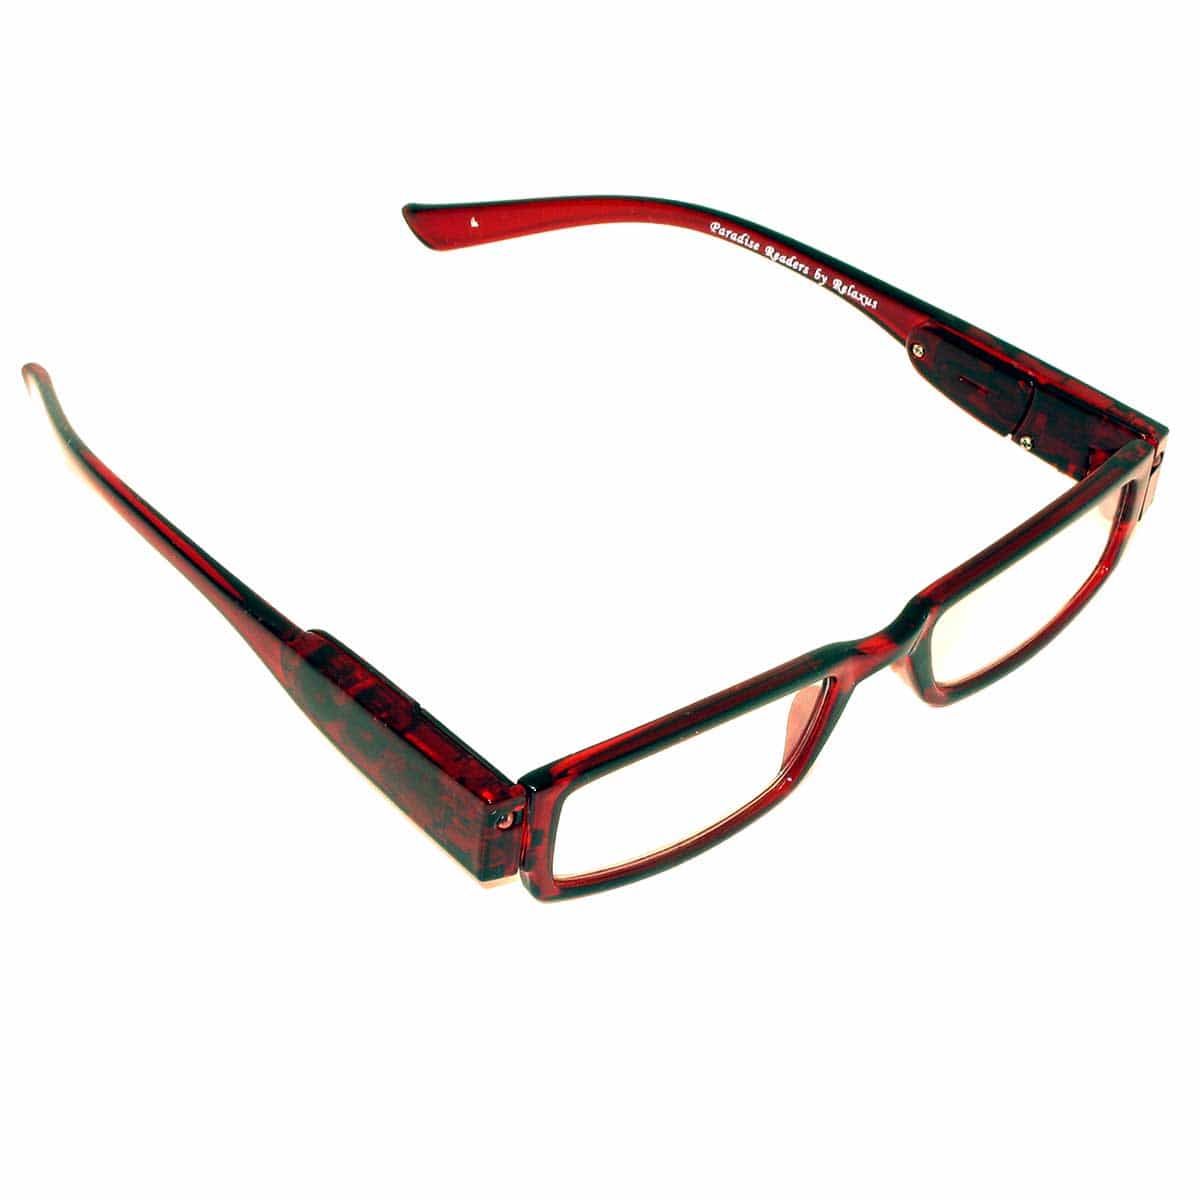 Wholesale “Light-Up” Night Reading Glasses